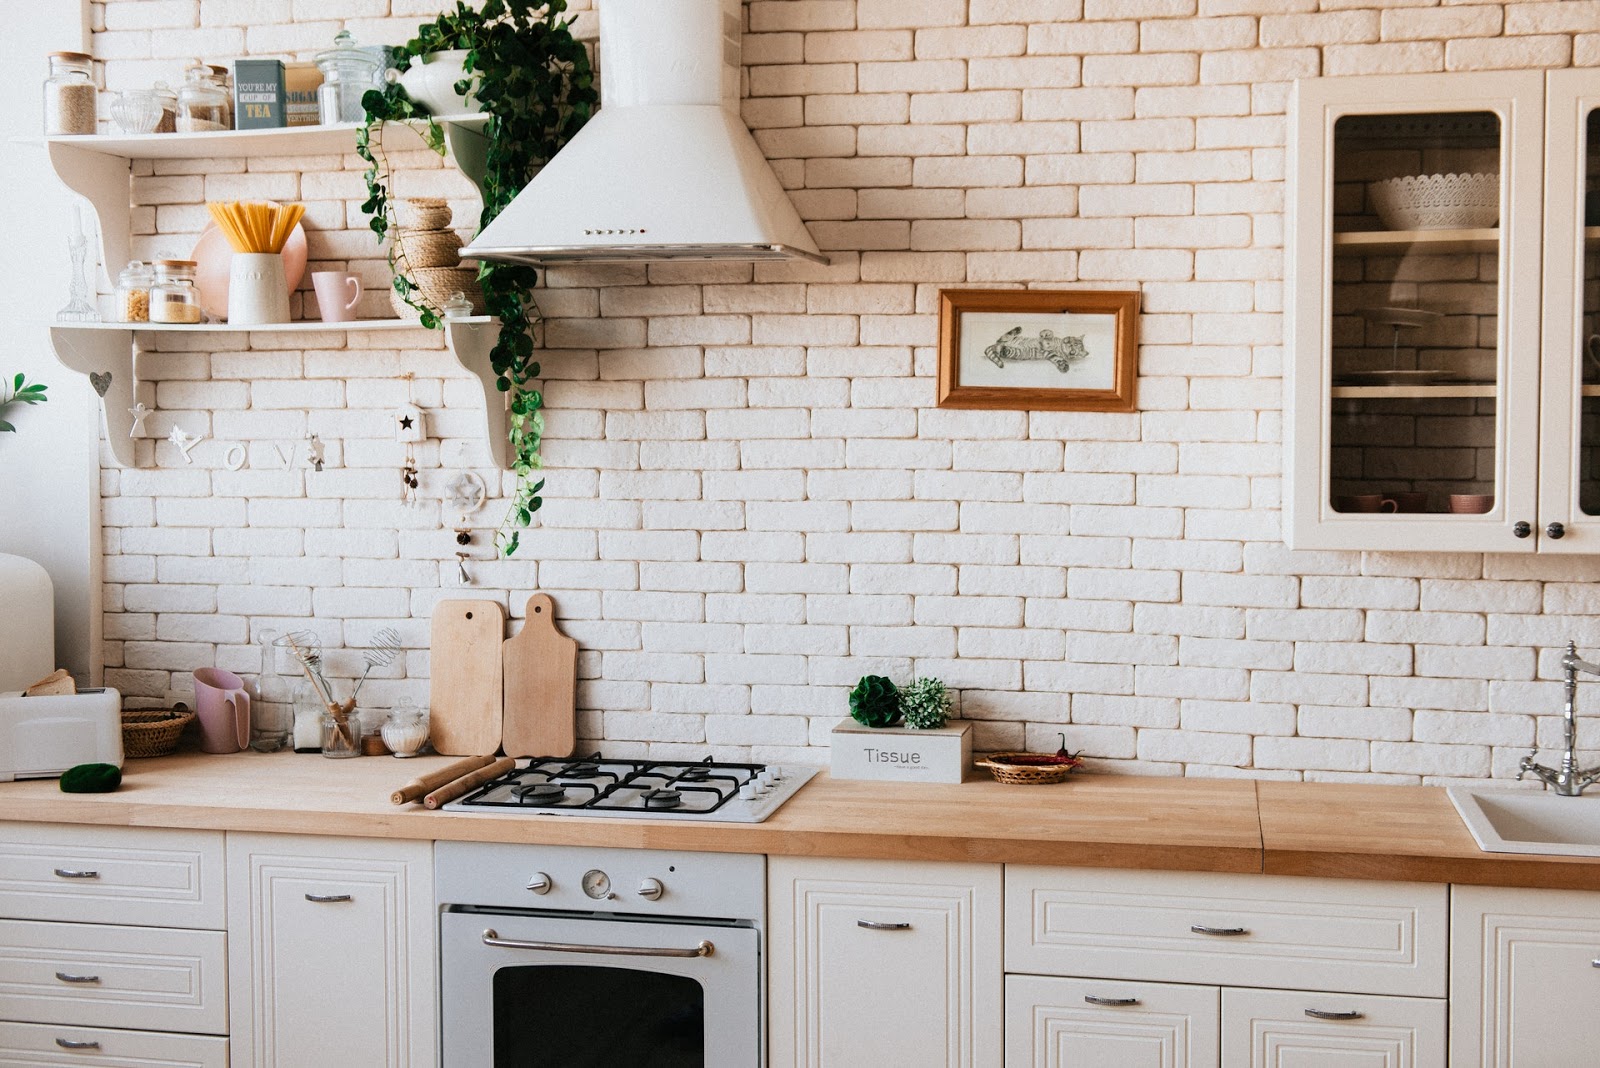 5 Fun Kitchen Wall Decor Ideas